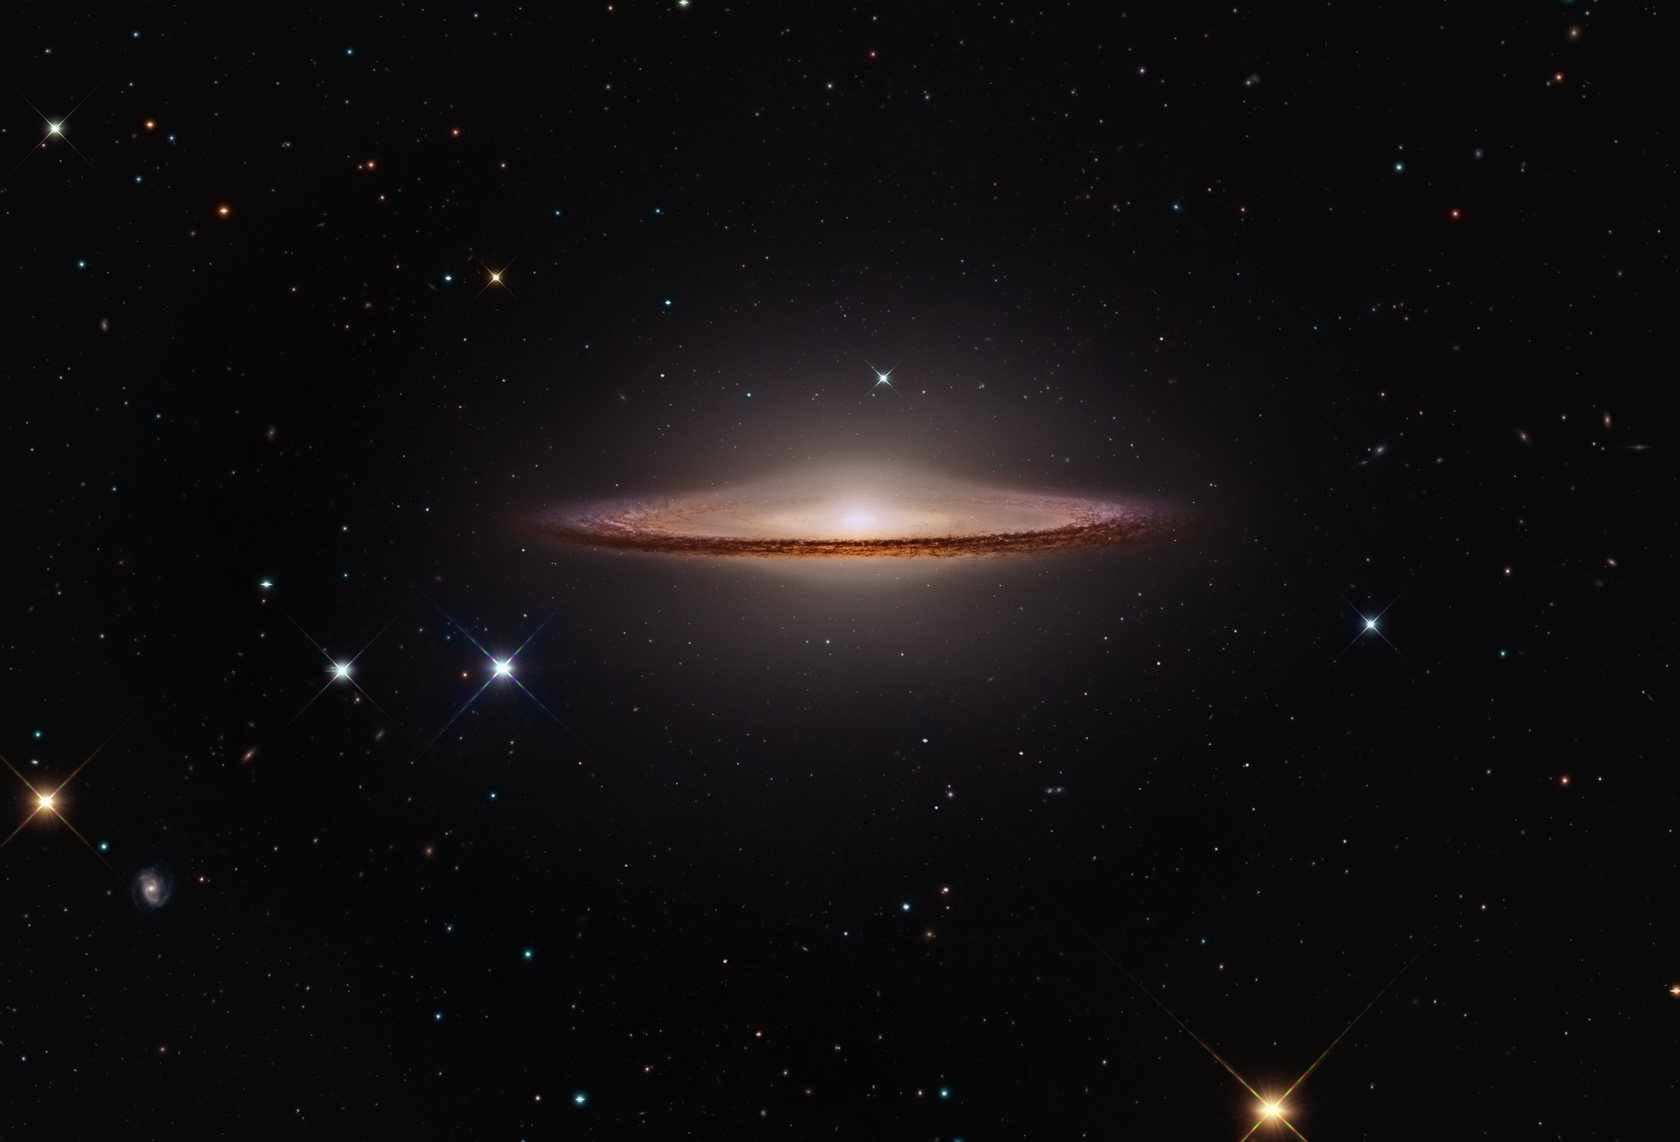 Galáxia do Sombrero, ou M104/NGC 4594 (Imagem: Giovanni Paglioli/NASA)